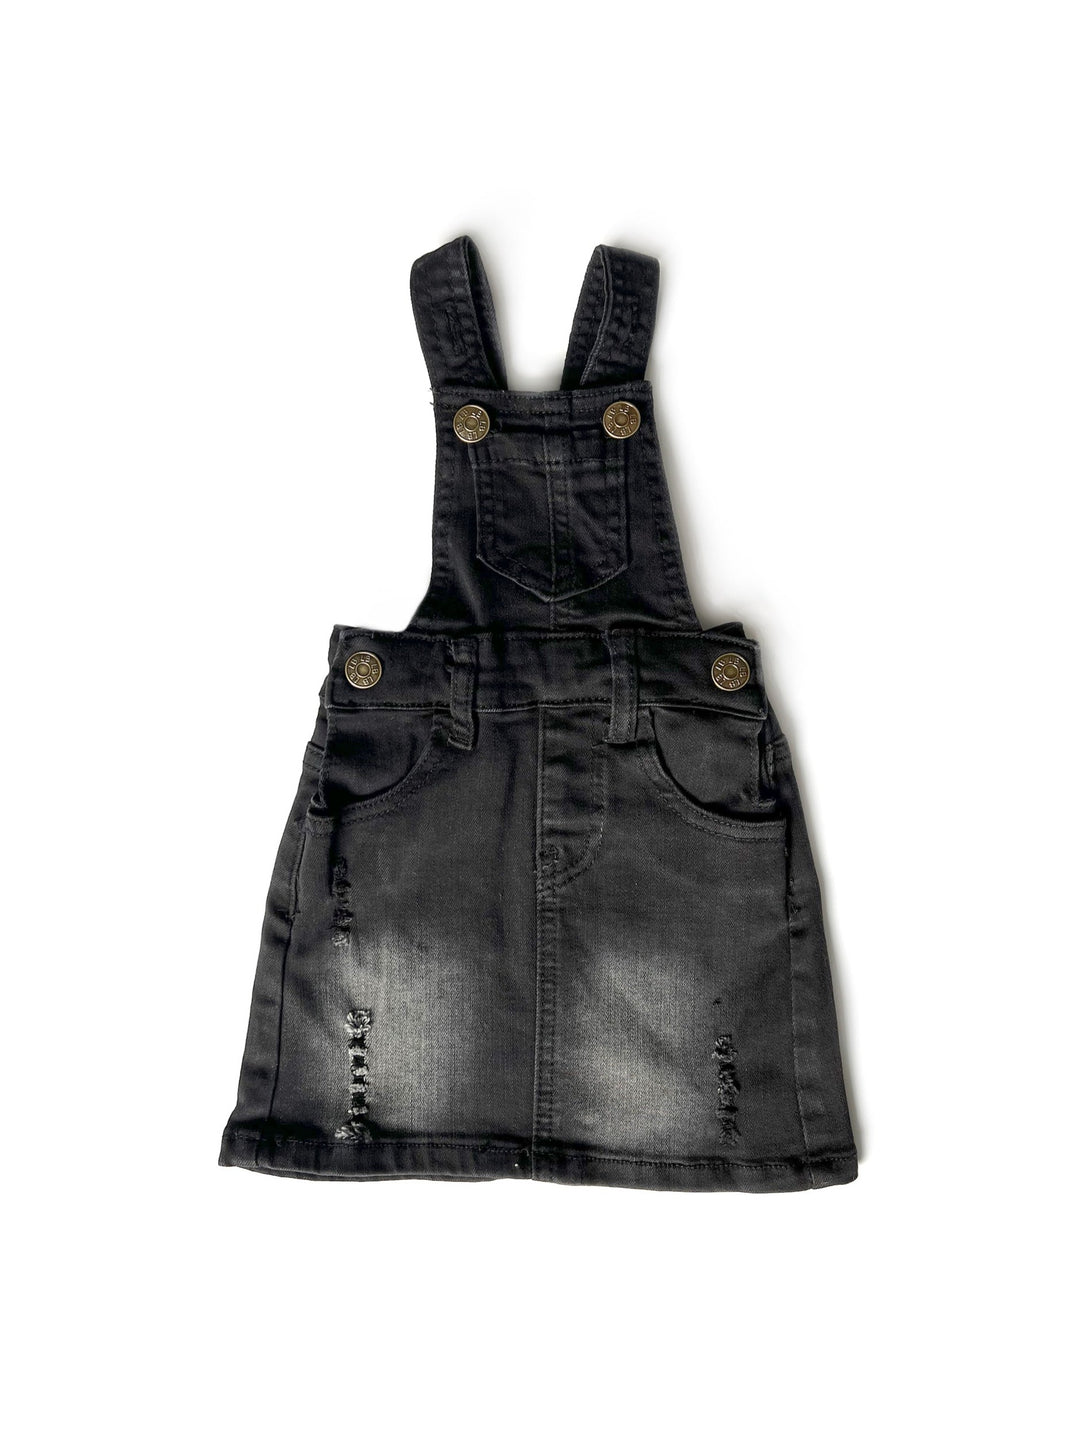 Denim Skirt Overalls- Black Wash